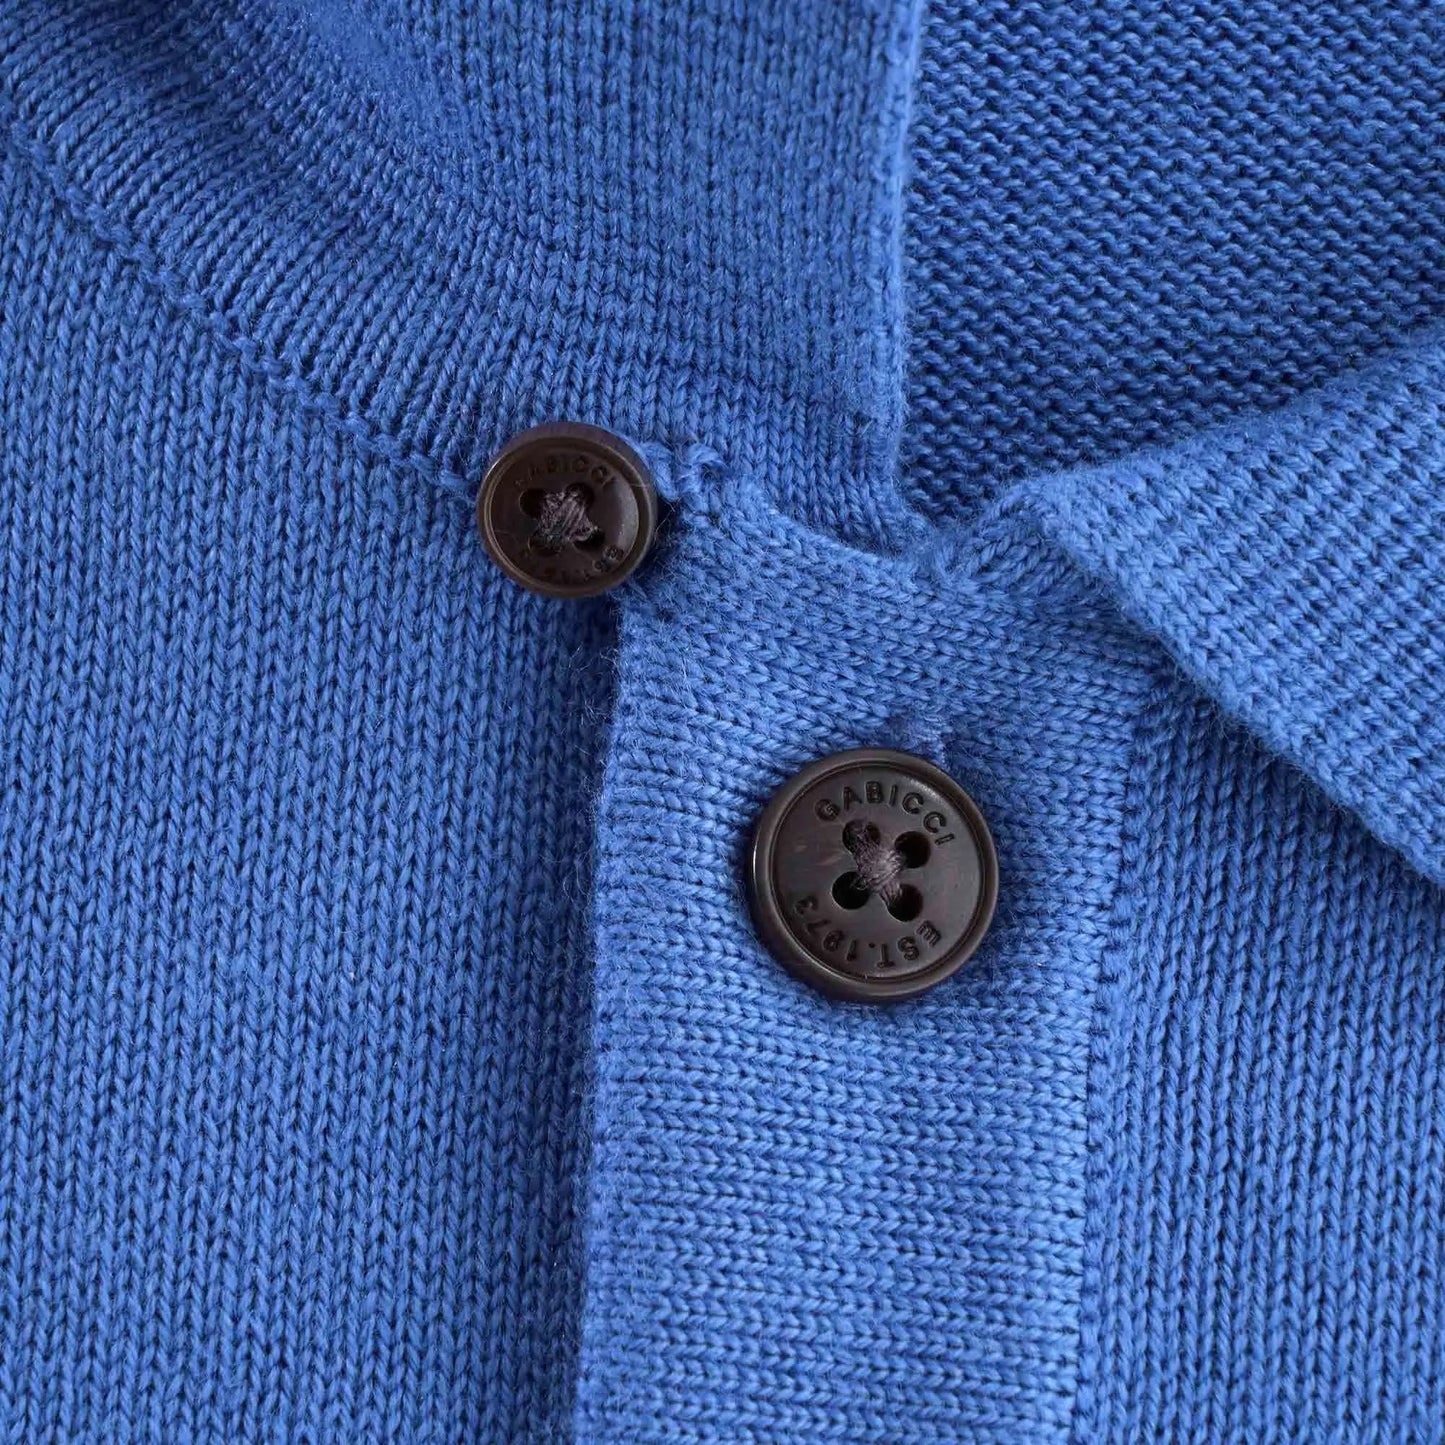 Jackson Knitted Polo - Blue Gabicci Vintage